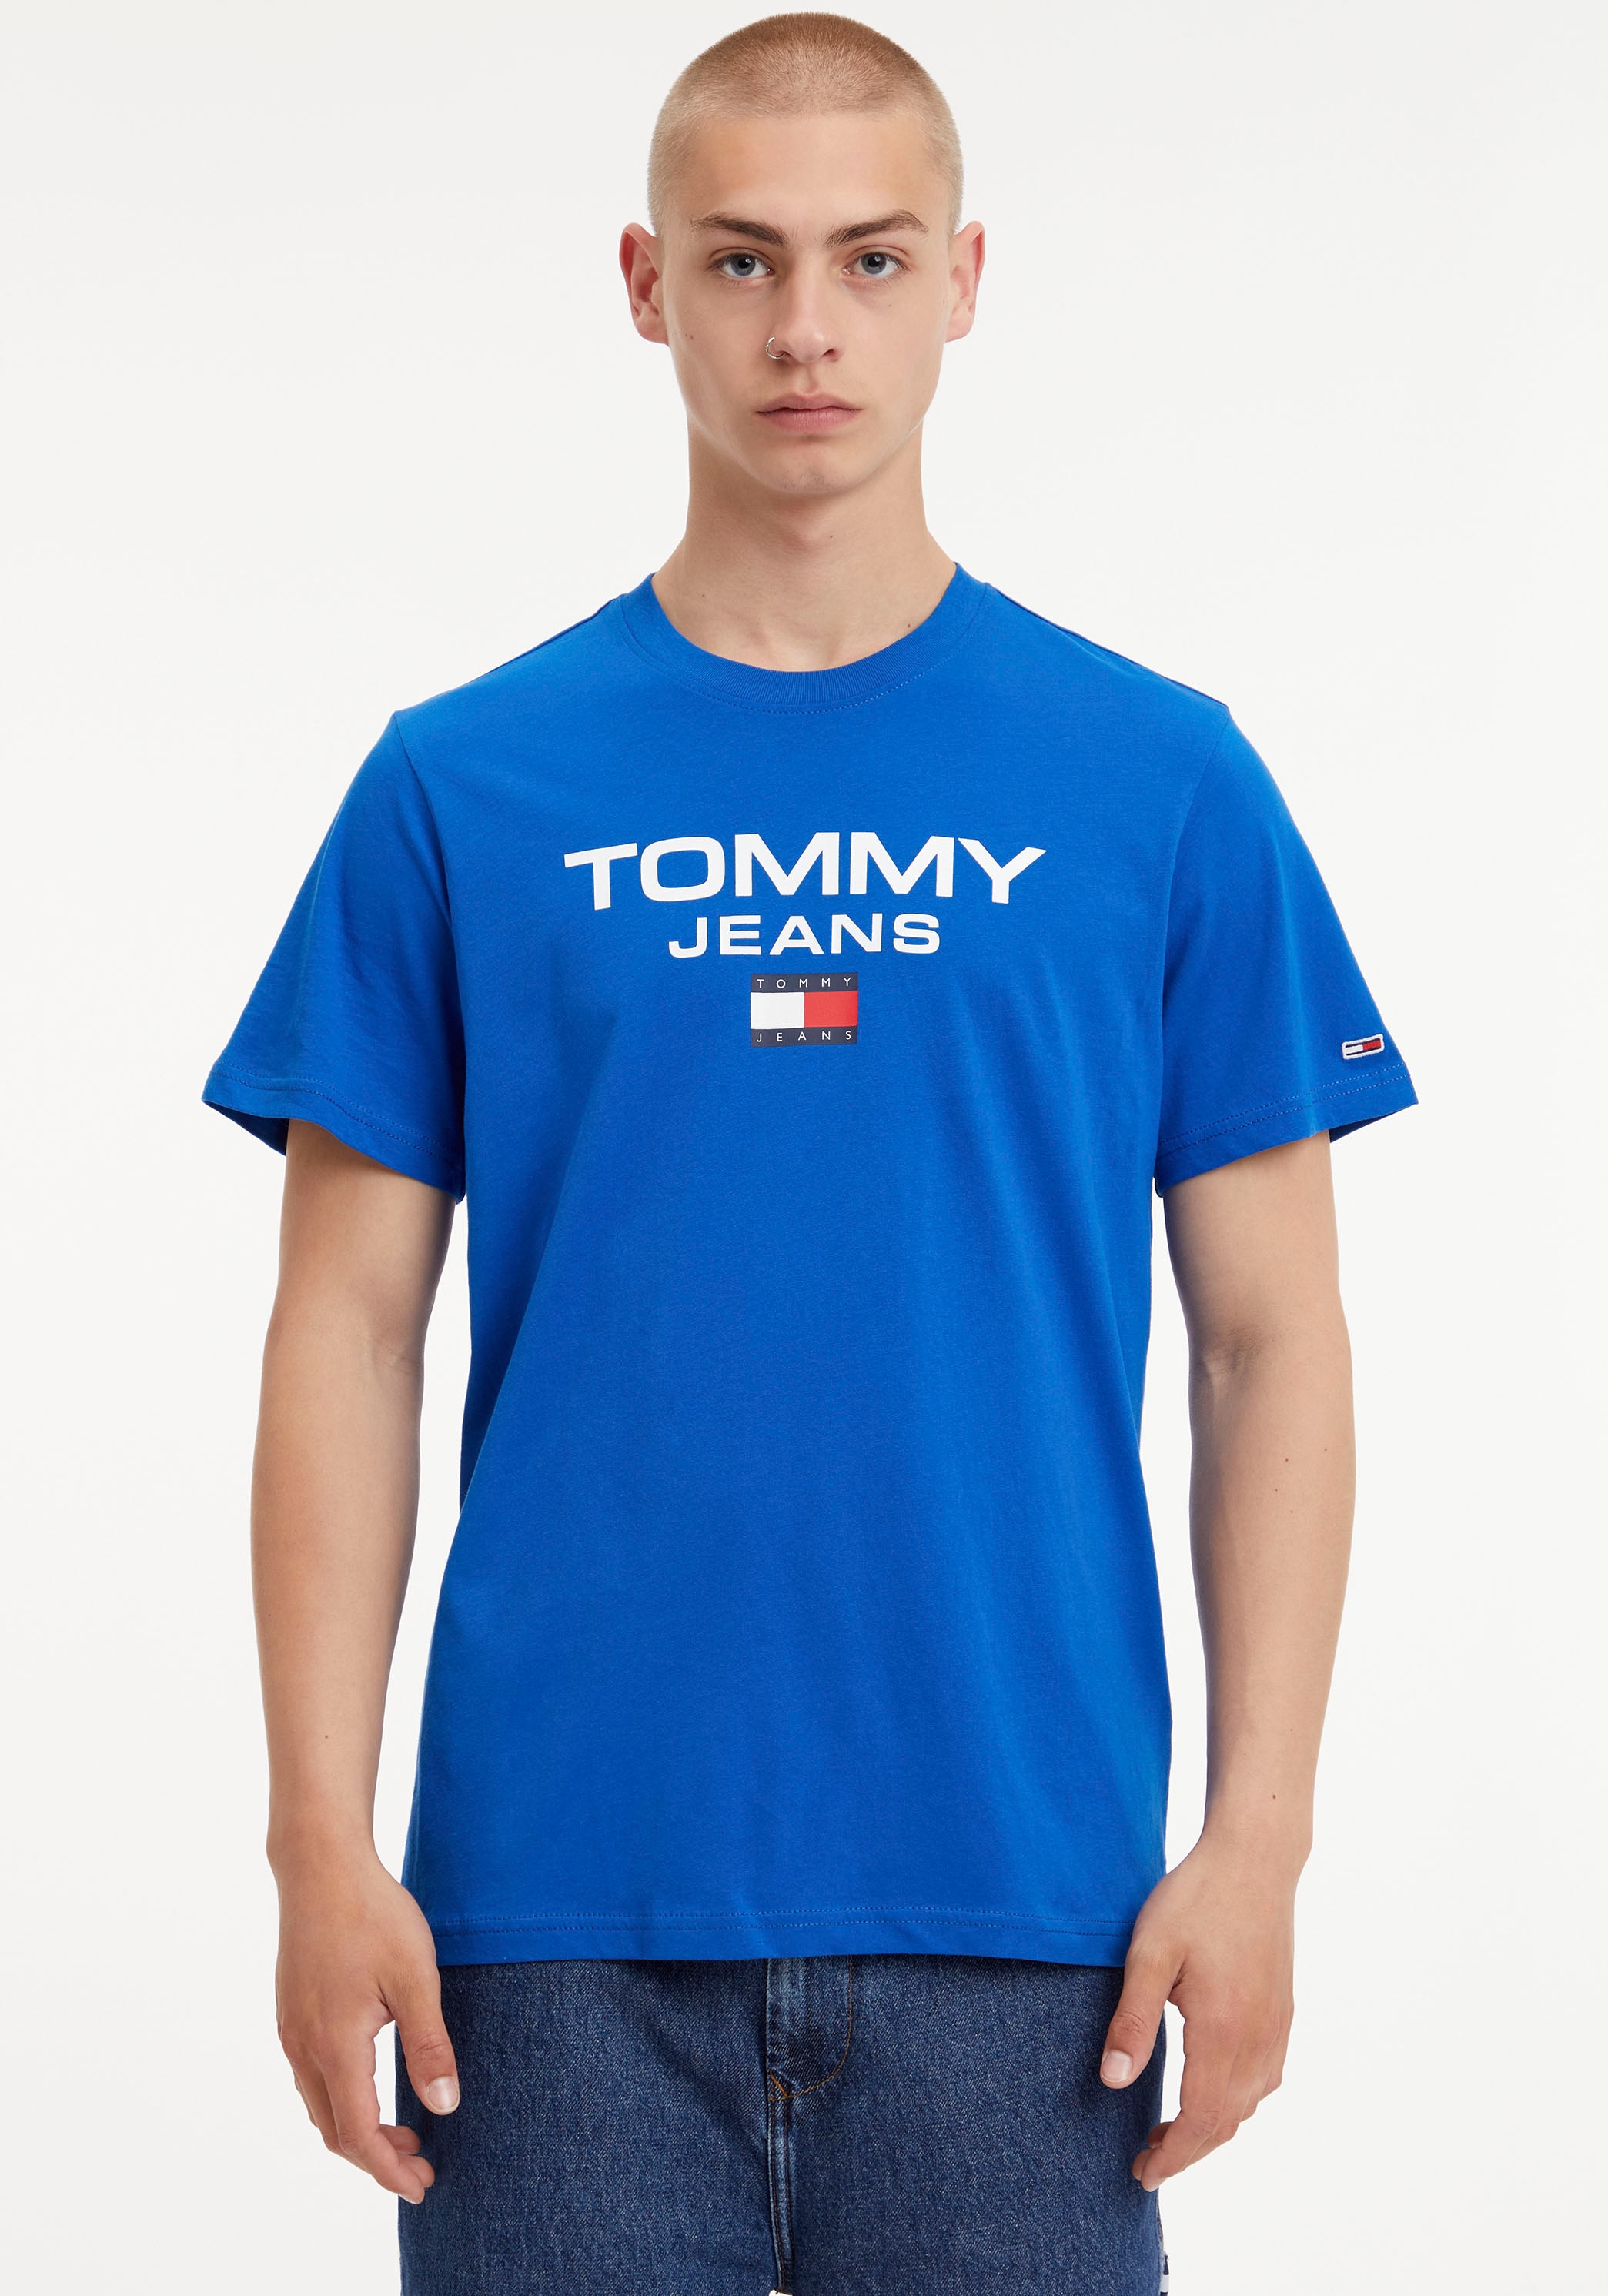 Jeans REG ♕ Logodruck T-Shirt bei »TJM Tommy ENTRY mit TEE«,